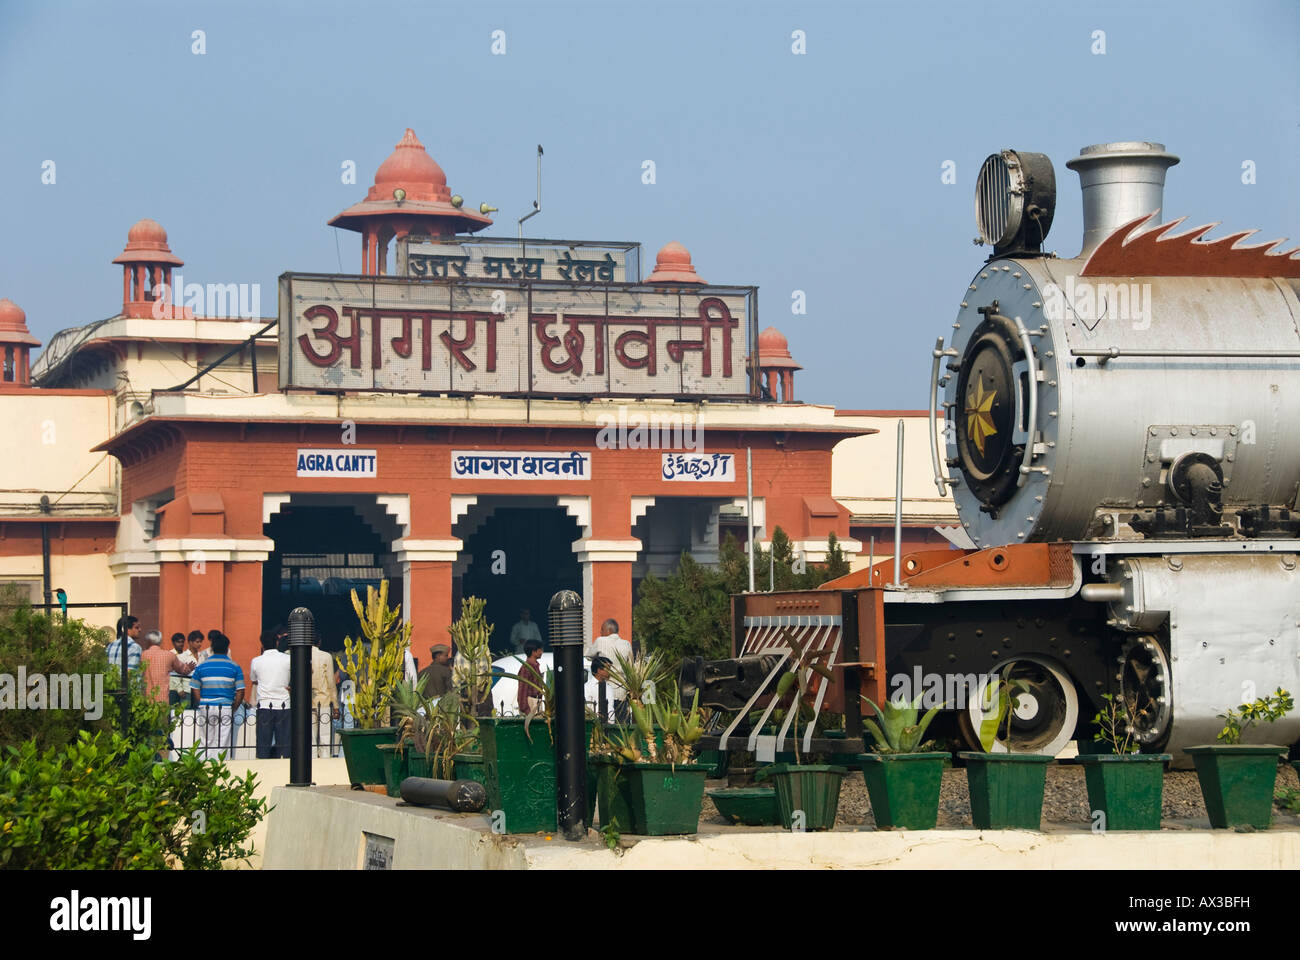 Die Station in Agra Agra Cantt in Indien genannt Stockfoto